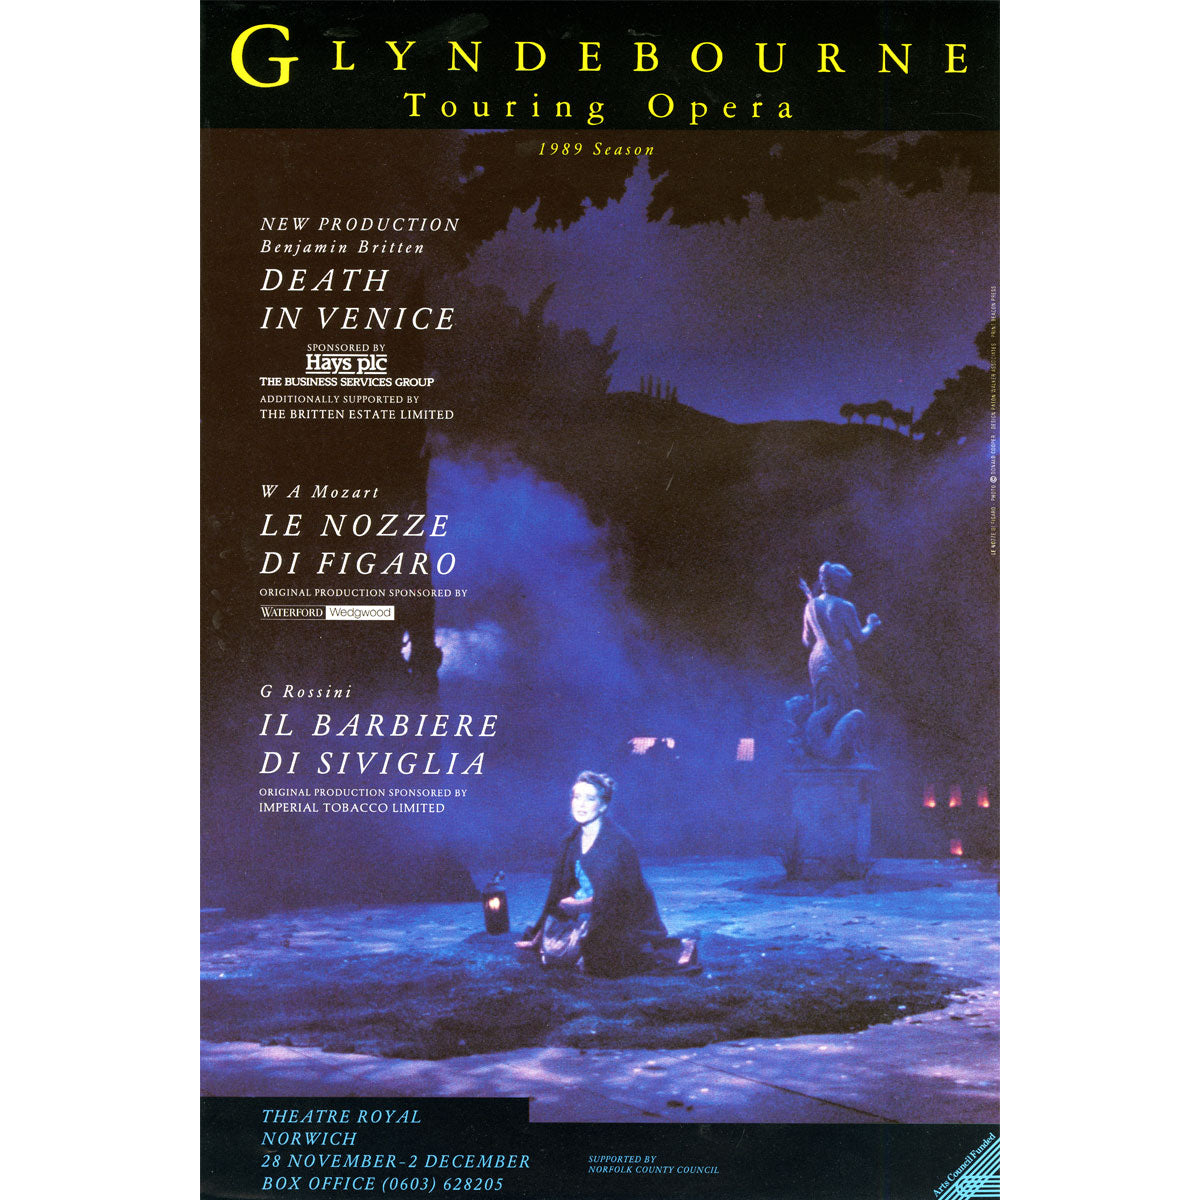 Glyndebourne Touring Opera Poster 1989